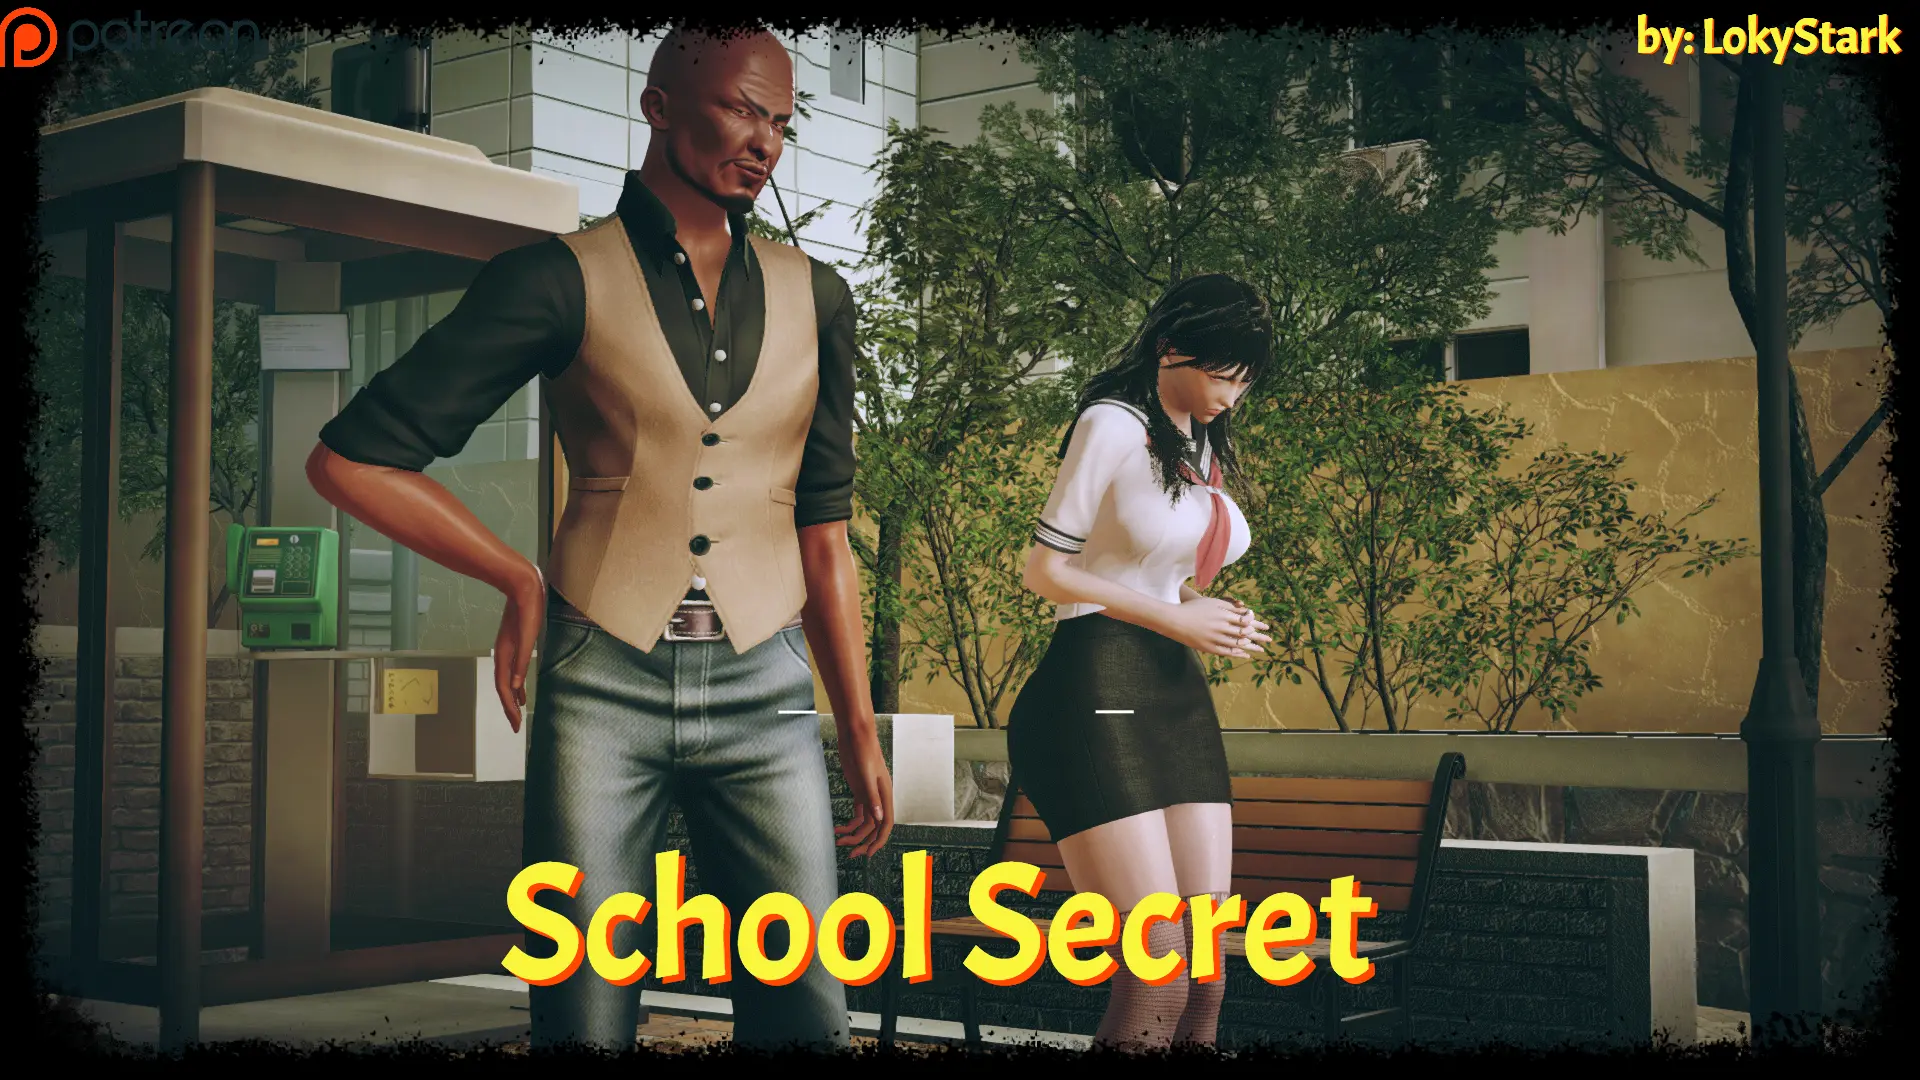 School Secret main image